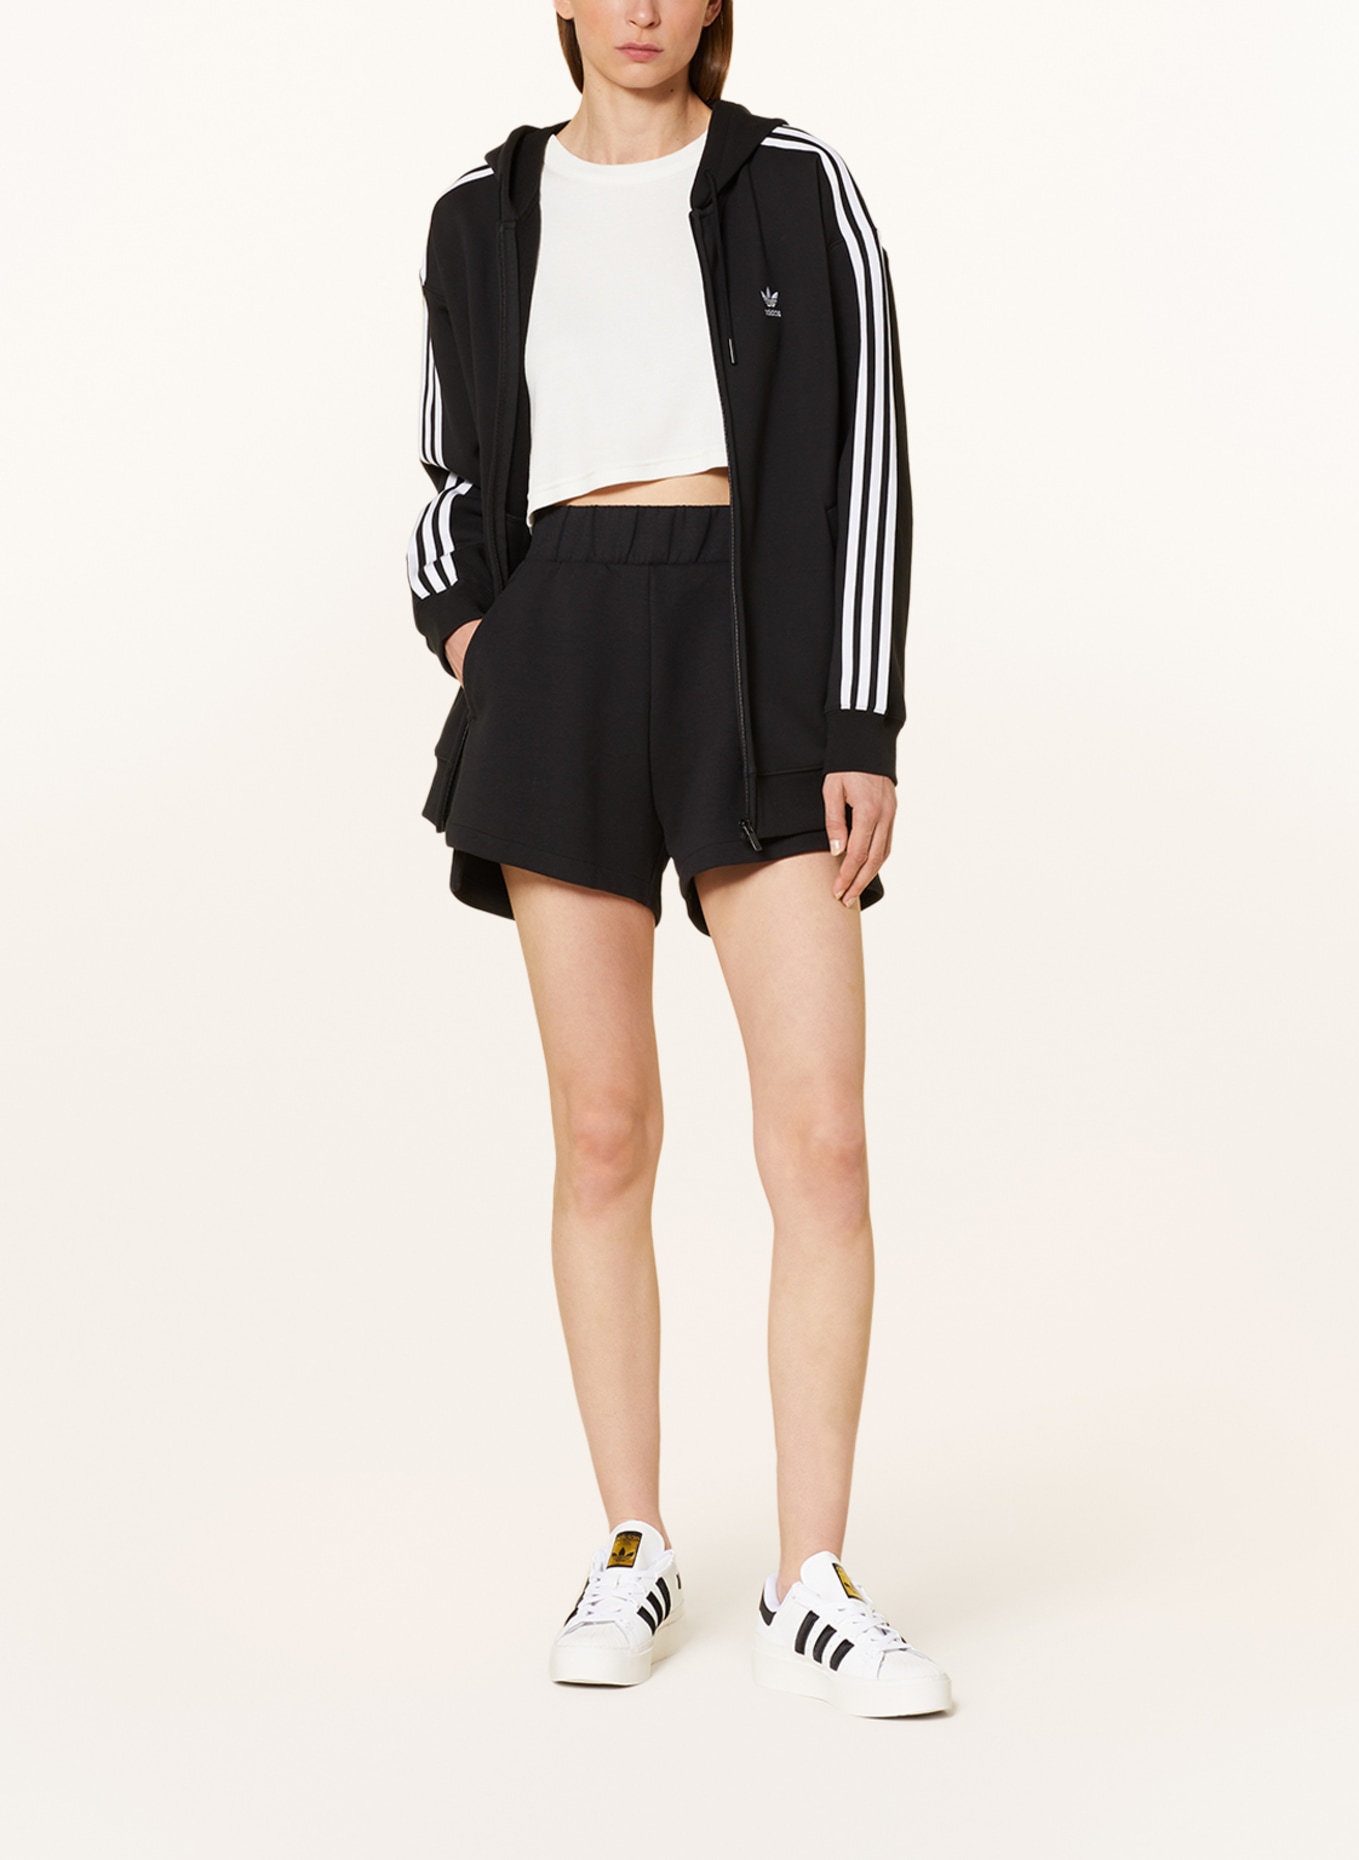 adidas Originals Oversized sweat jacket ADICOLOR CLASSICS in black/ white | Jacken